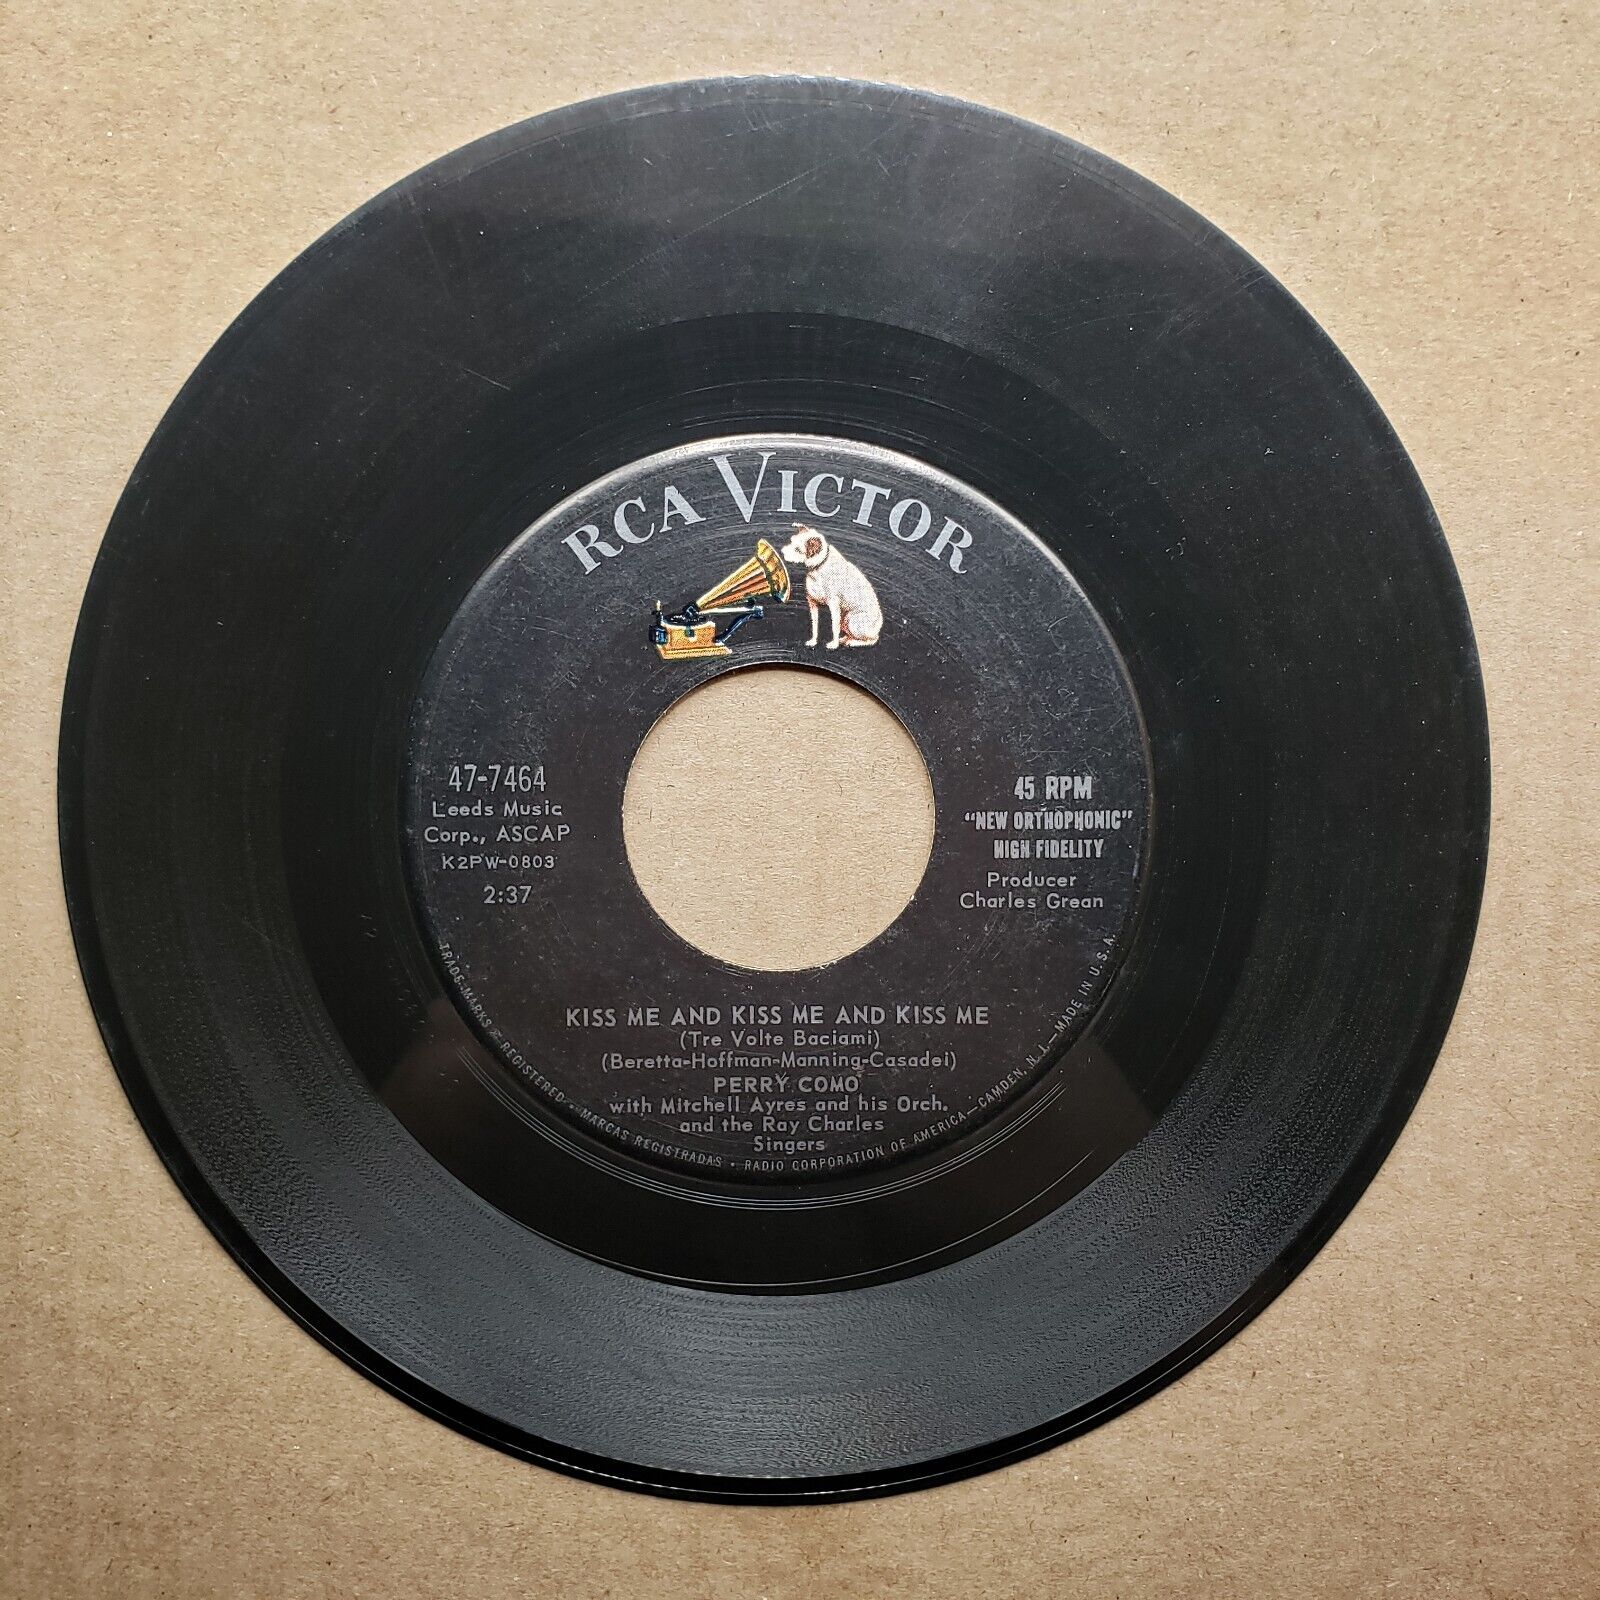 Perry Como - Tomboy; Kiss Me And Kiss Me And Kiss Me - Vinyl 45 RPM